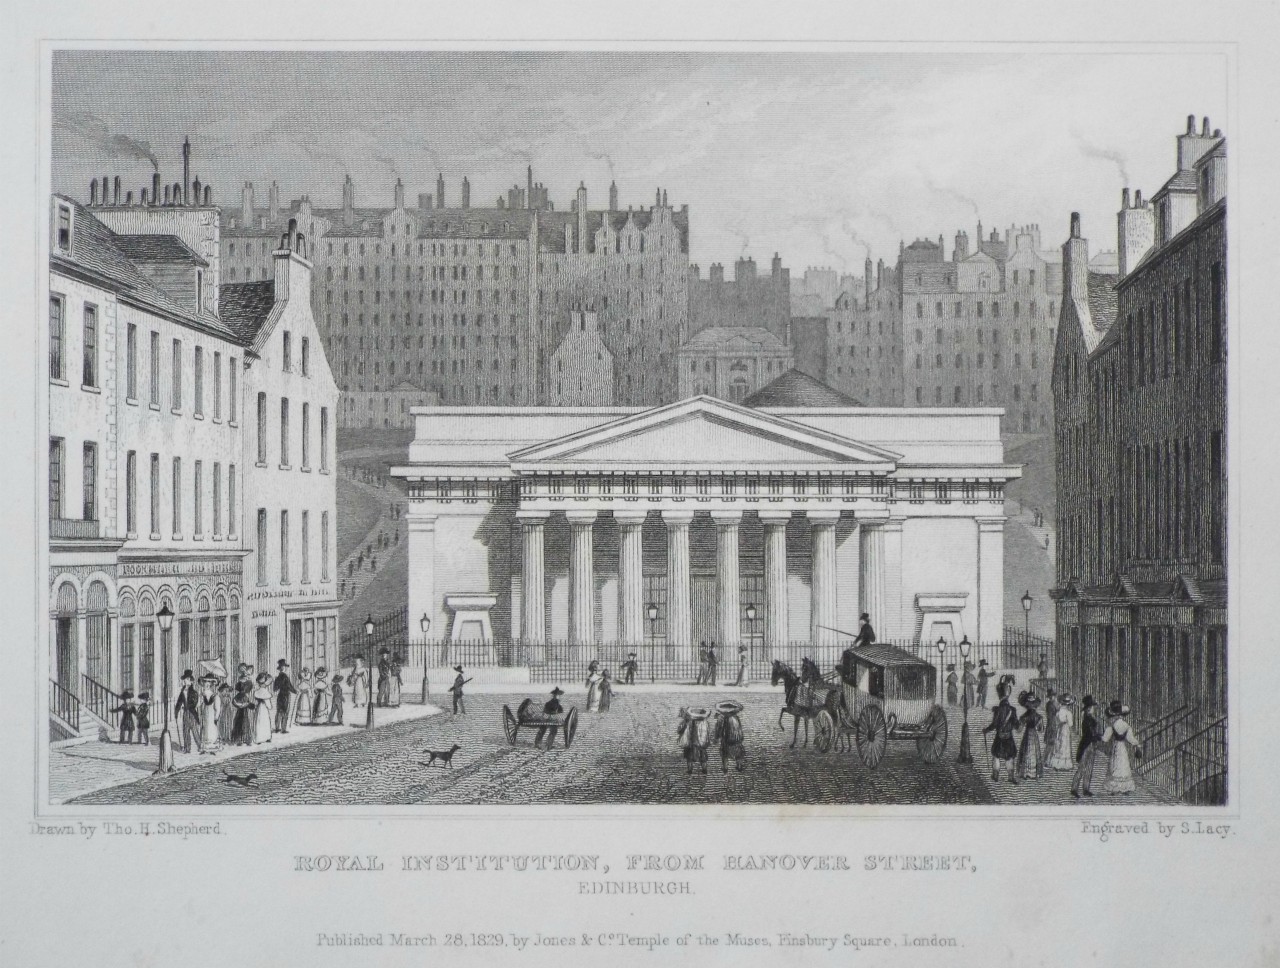 Print - Royal Institution, from Hanover Street, Edinburgh. - Lacy